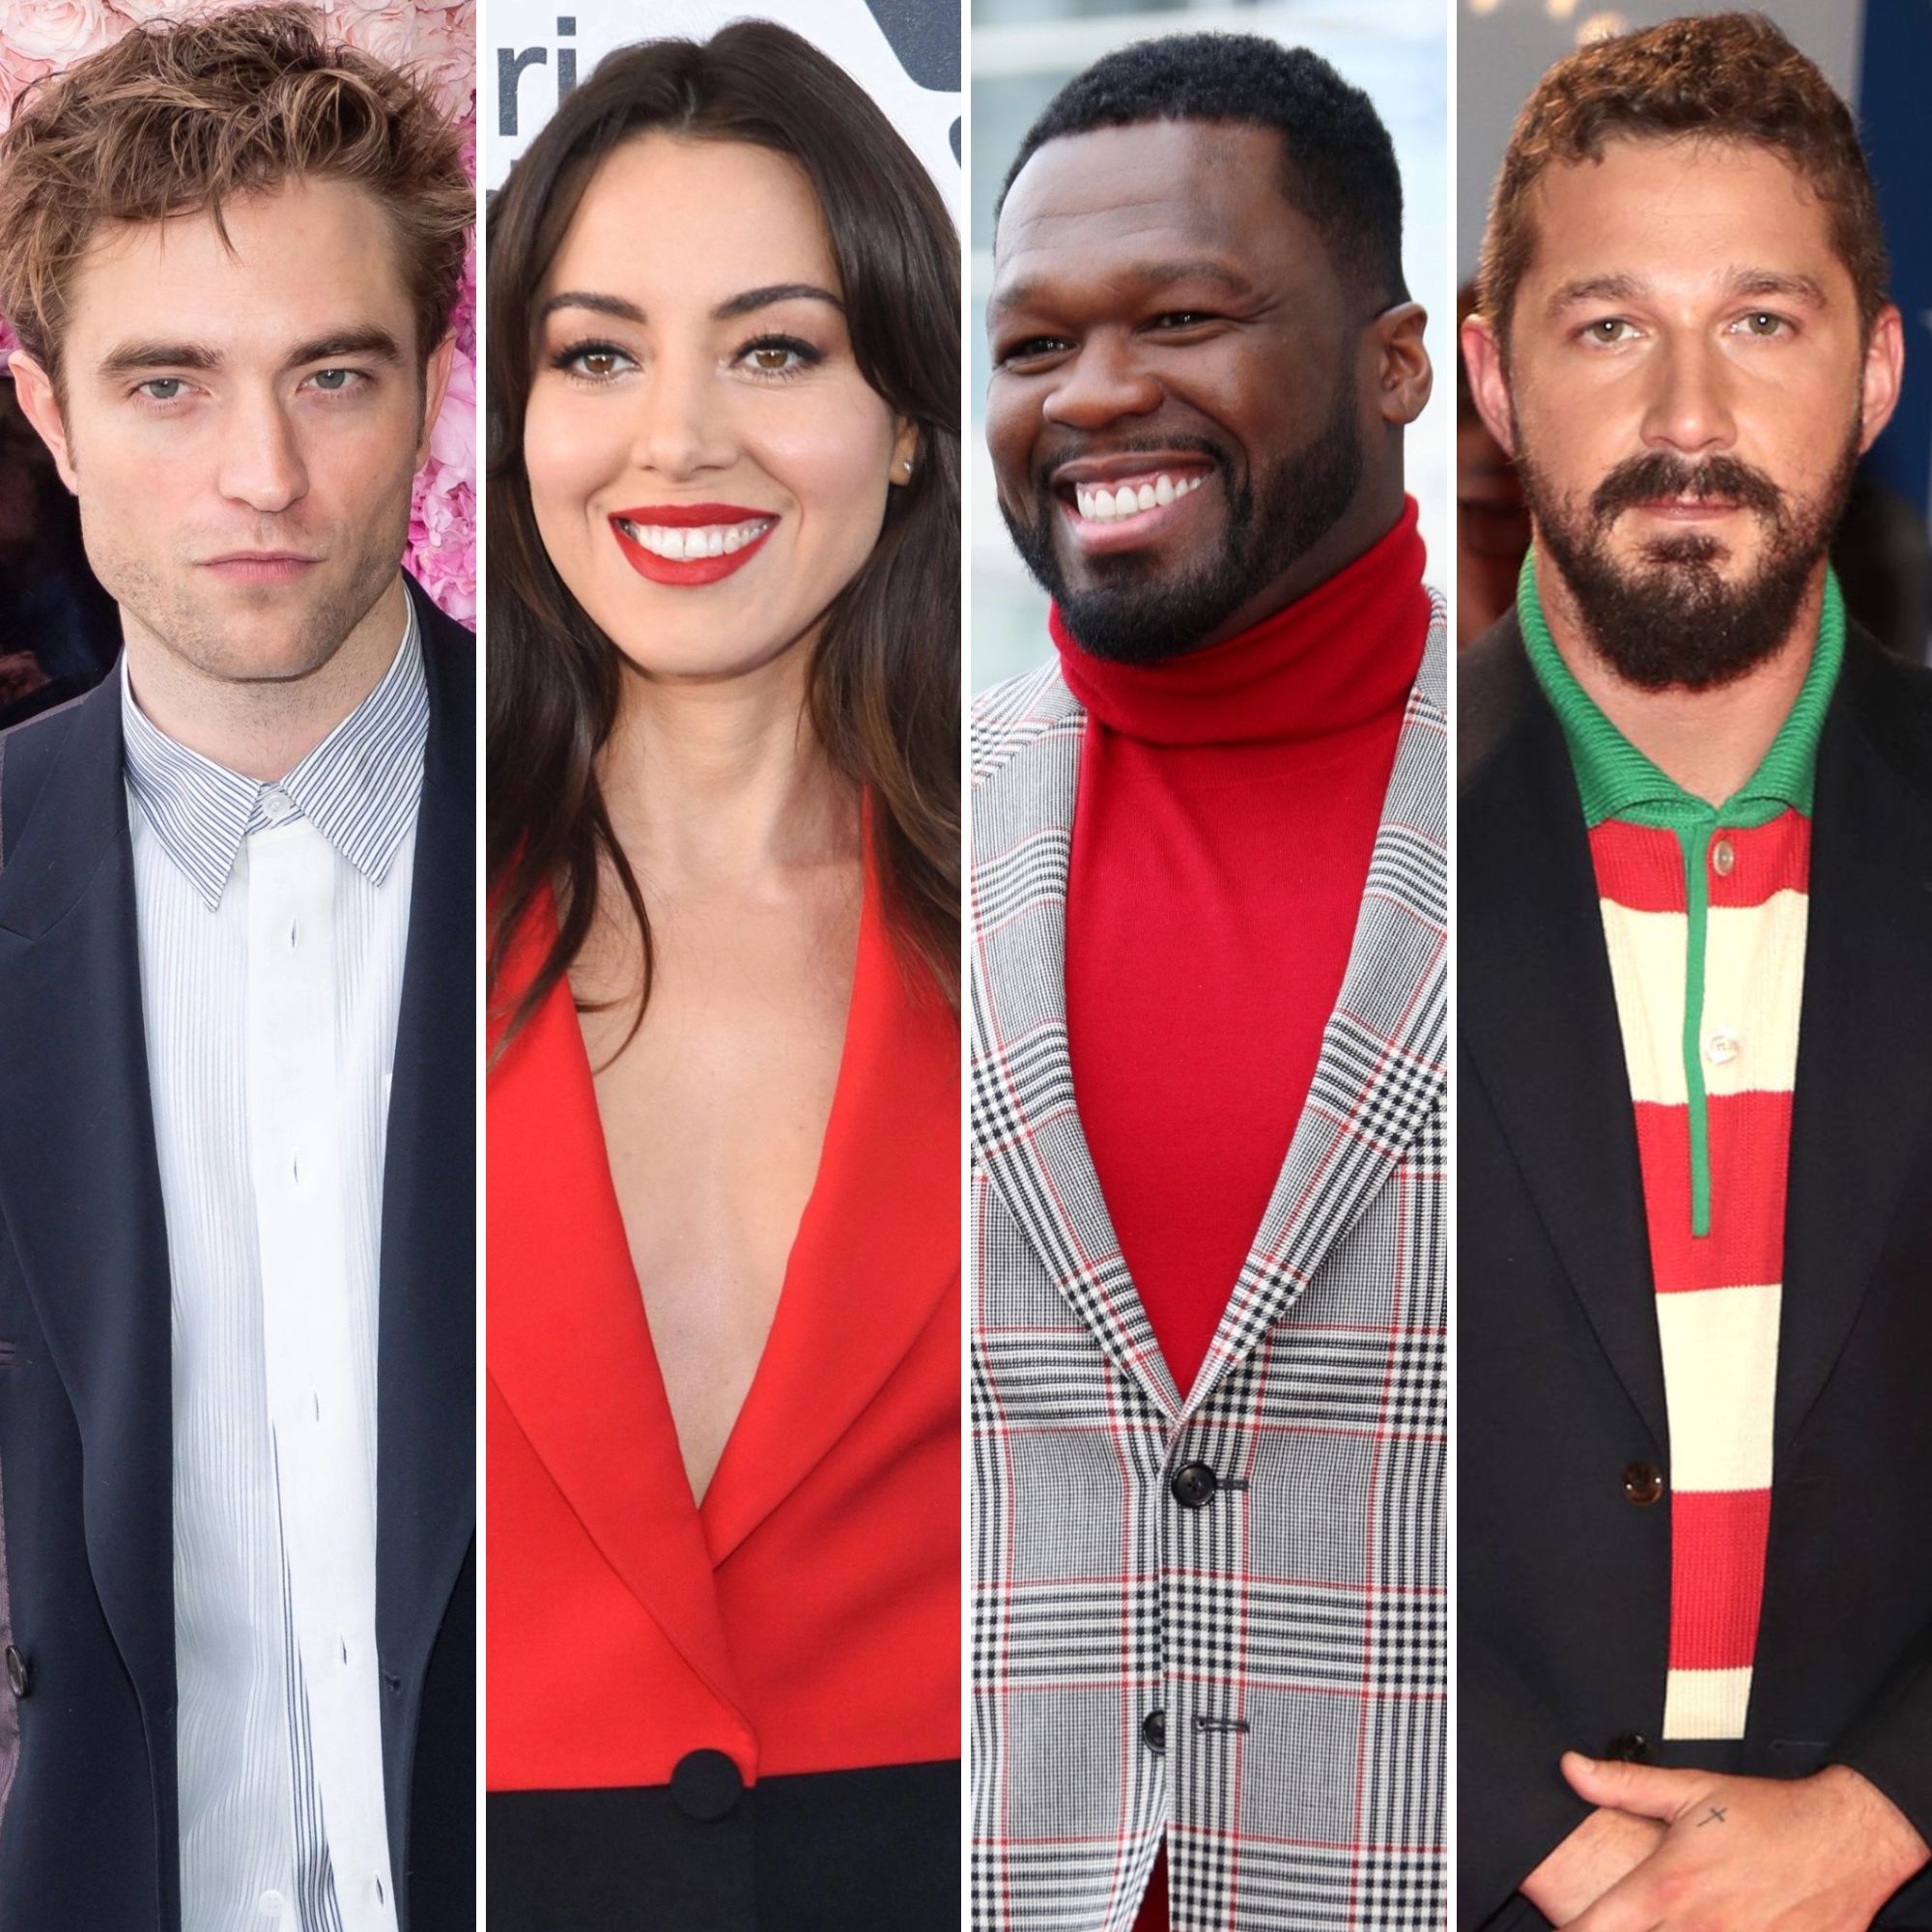 Celebrities Who Had Sex on Screen 50 Cent, Robert Pattinson pic